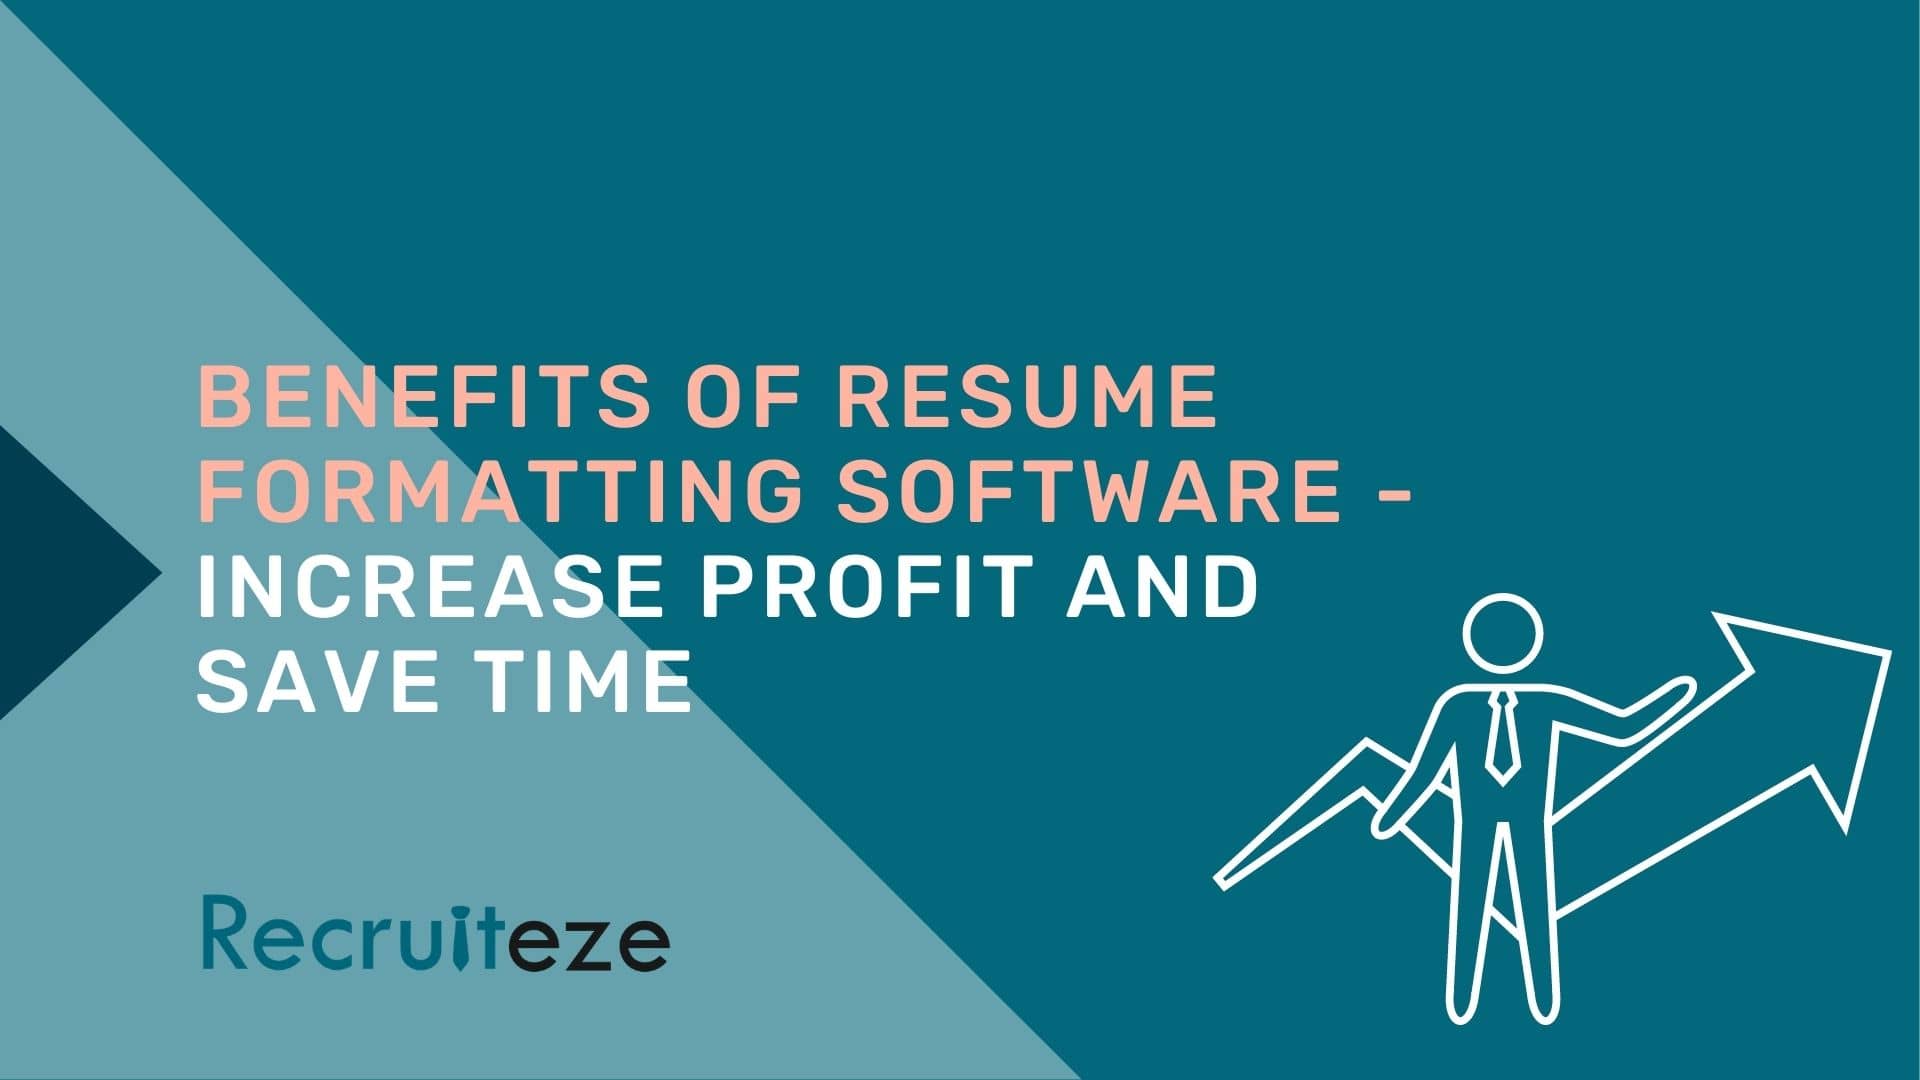 Benefits of resume formatting software - Recruiteze featured image